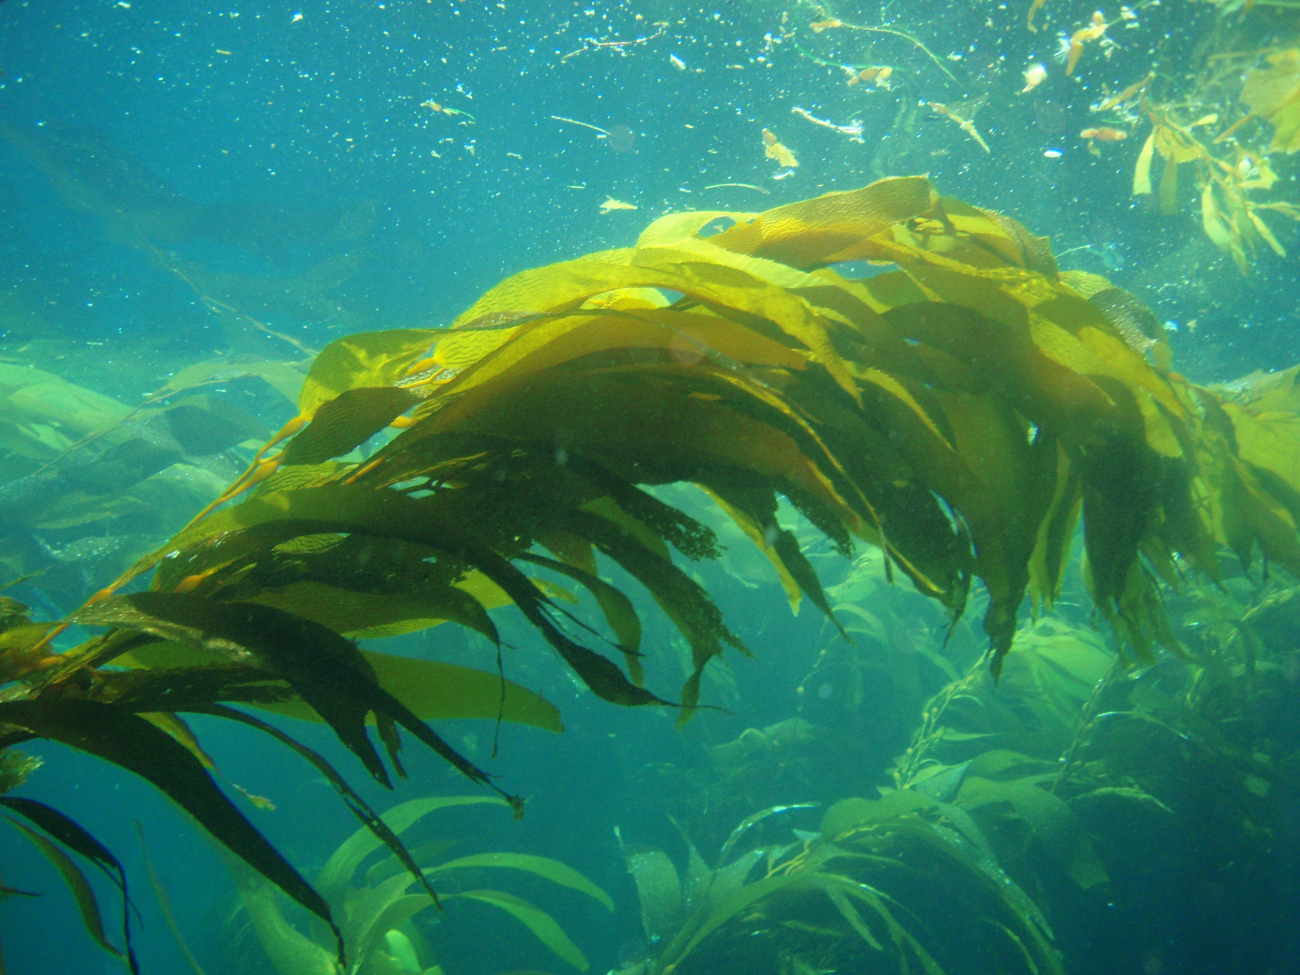 Giant kelp (Macrocystis pyrifera)